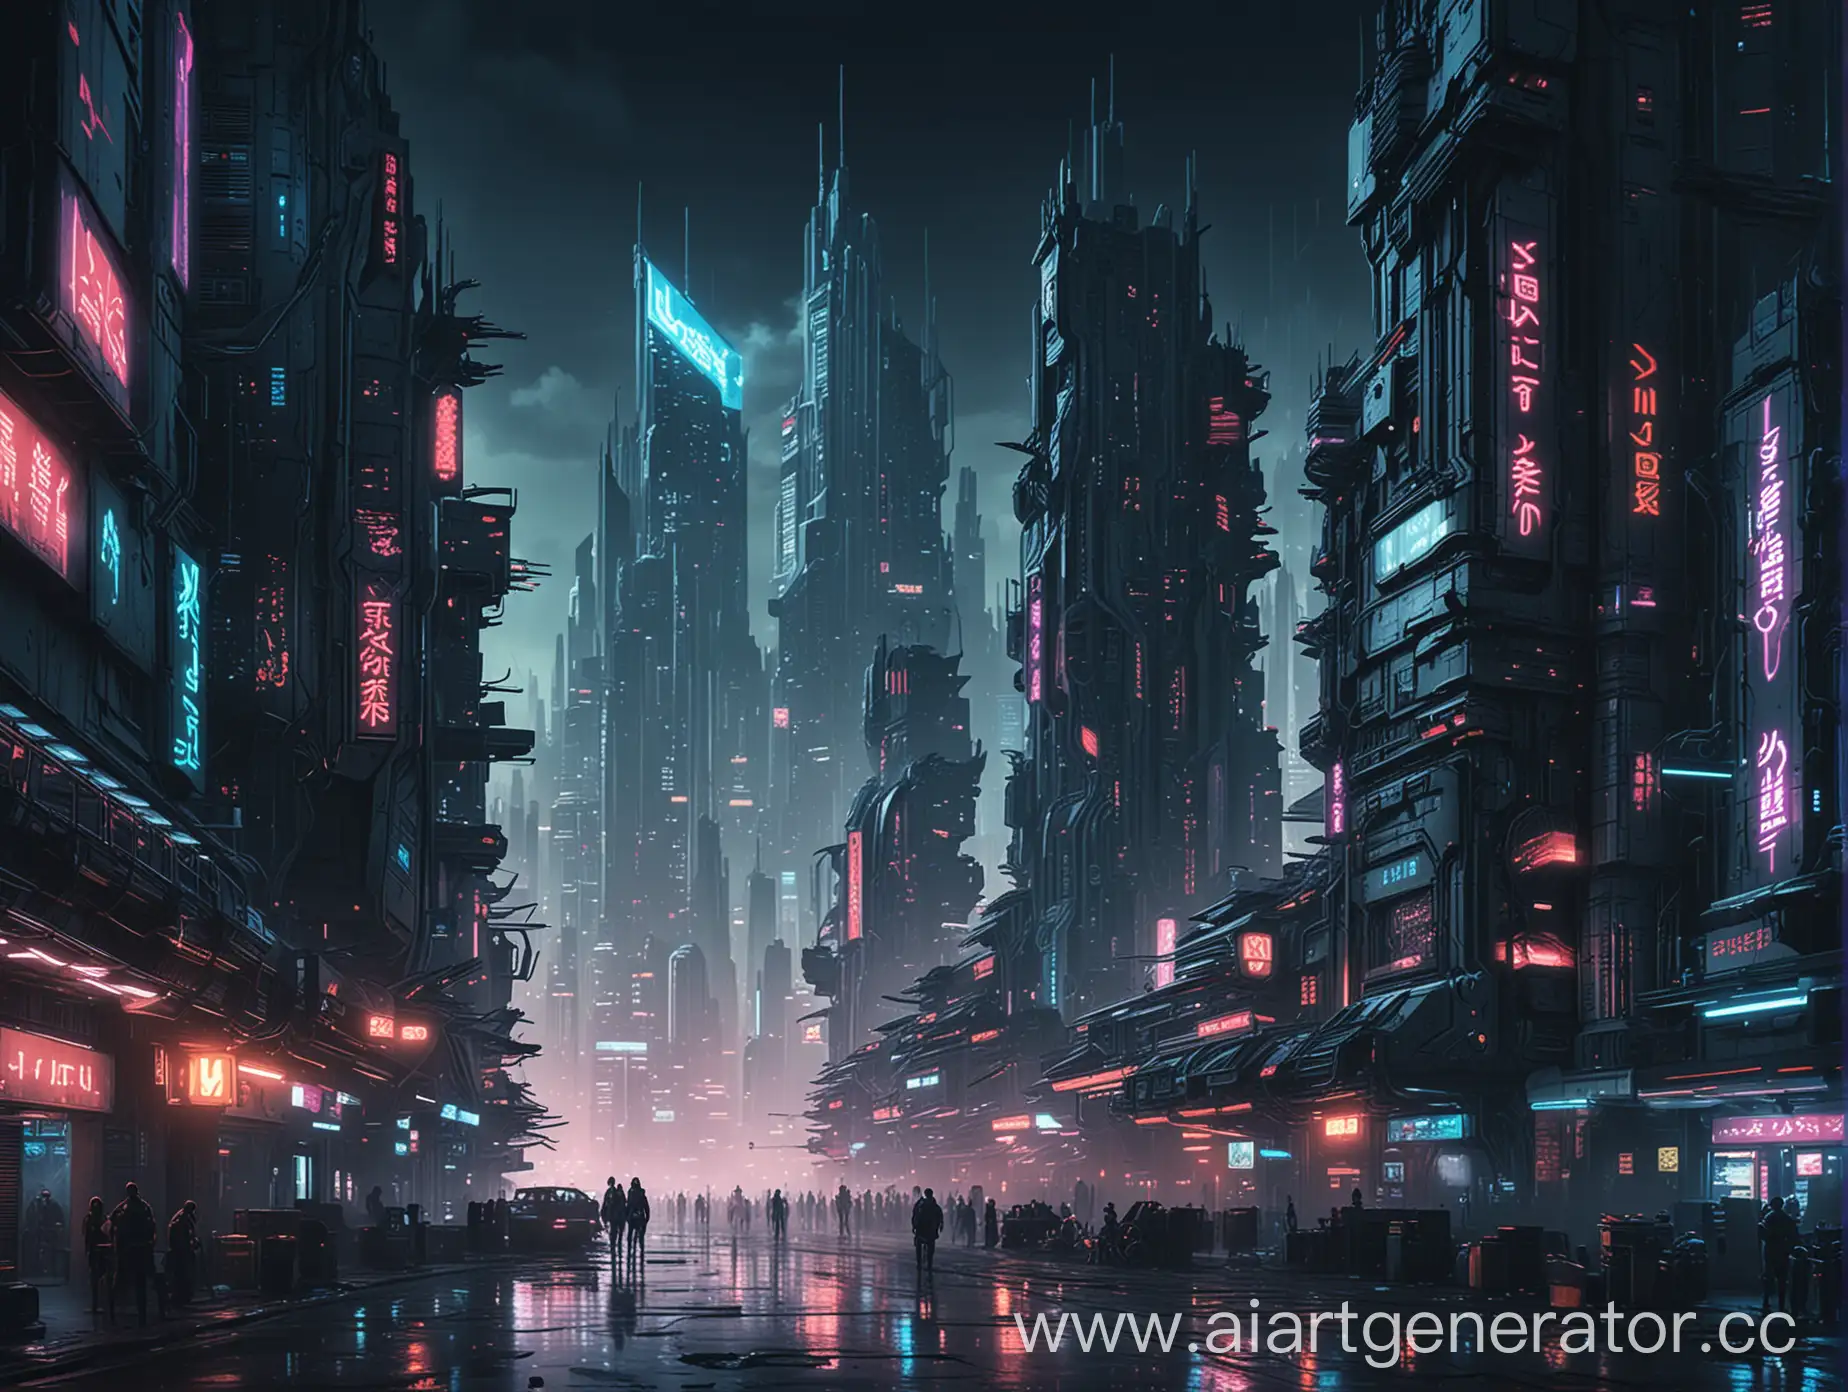 Futuristic-Cyberpunk-Cityscape-at-Night-in-Stunning-4K-Resolution